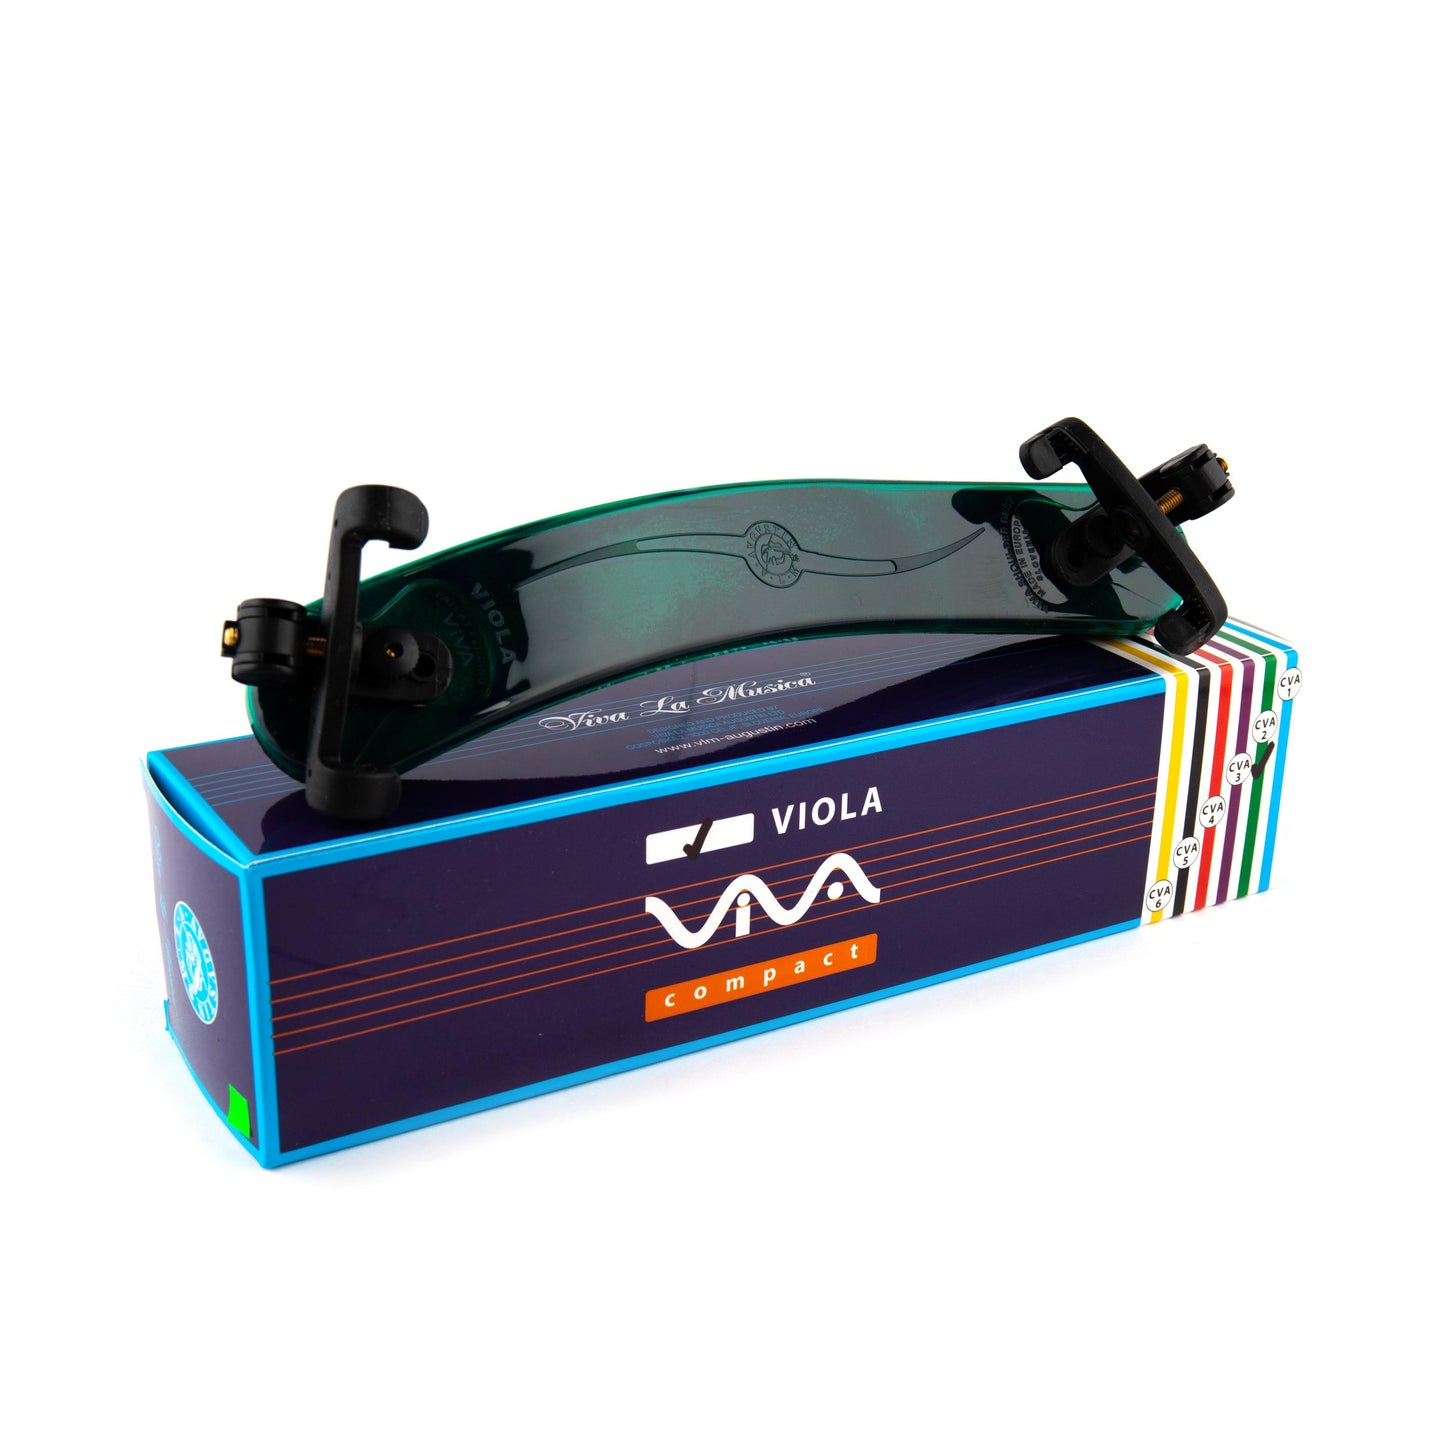 VLM Viola Compact Original Shoulder Rest